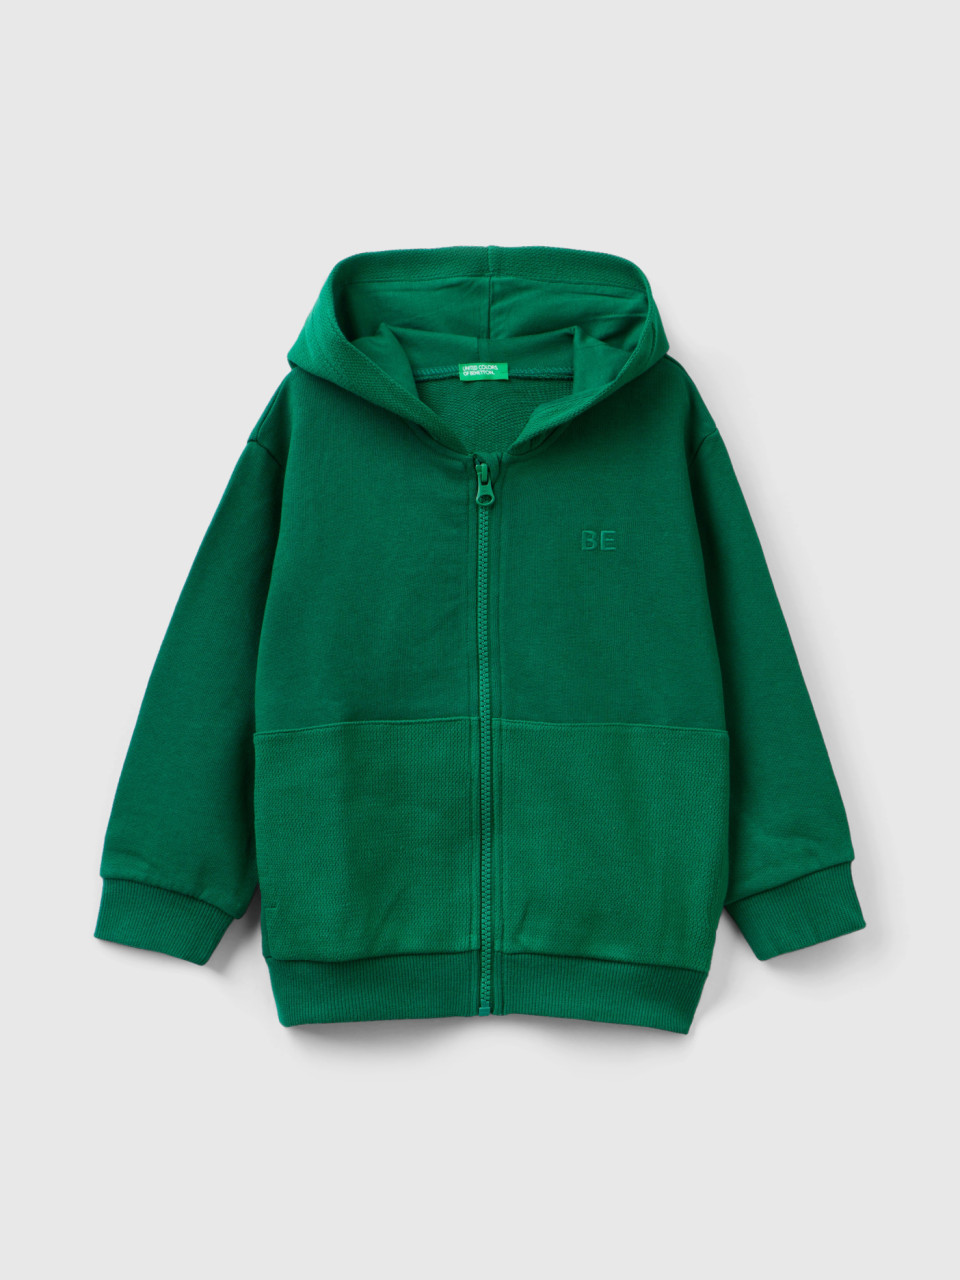 Benetton, Sweatshirt With Zip And Pockets, Green, Kids